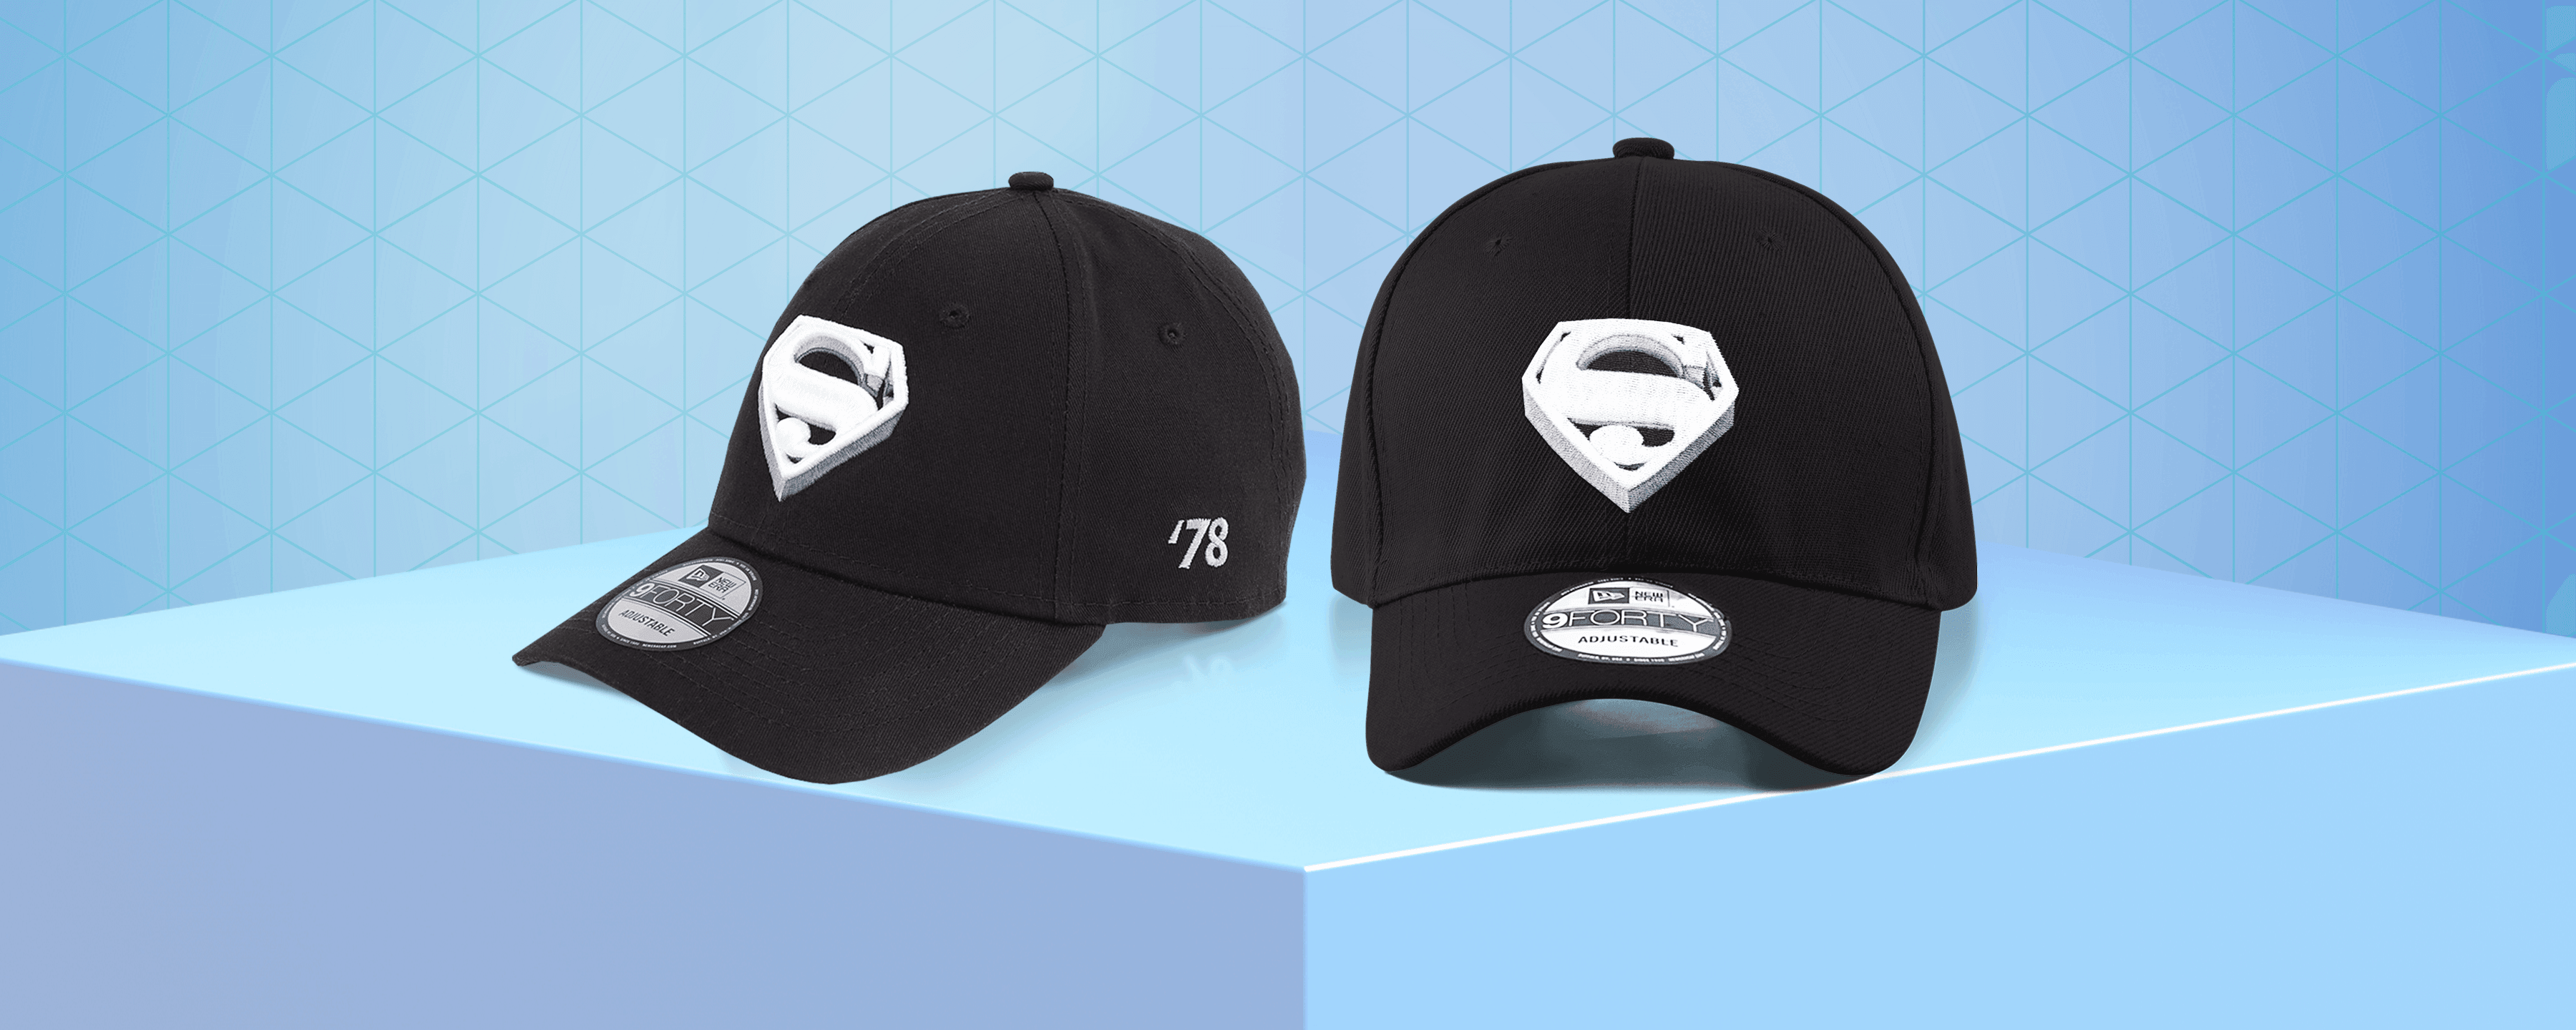 SUPERMAN: THE MOVIE Logo Exclusive New Era Hat